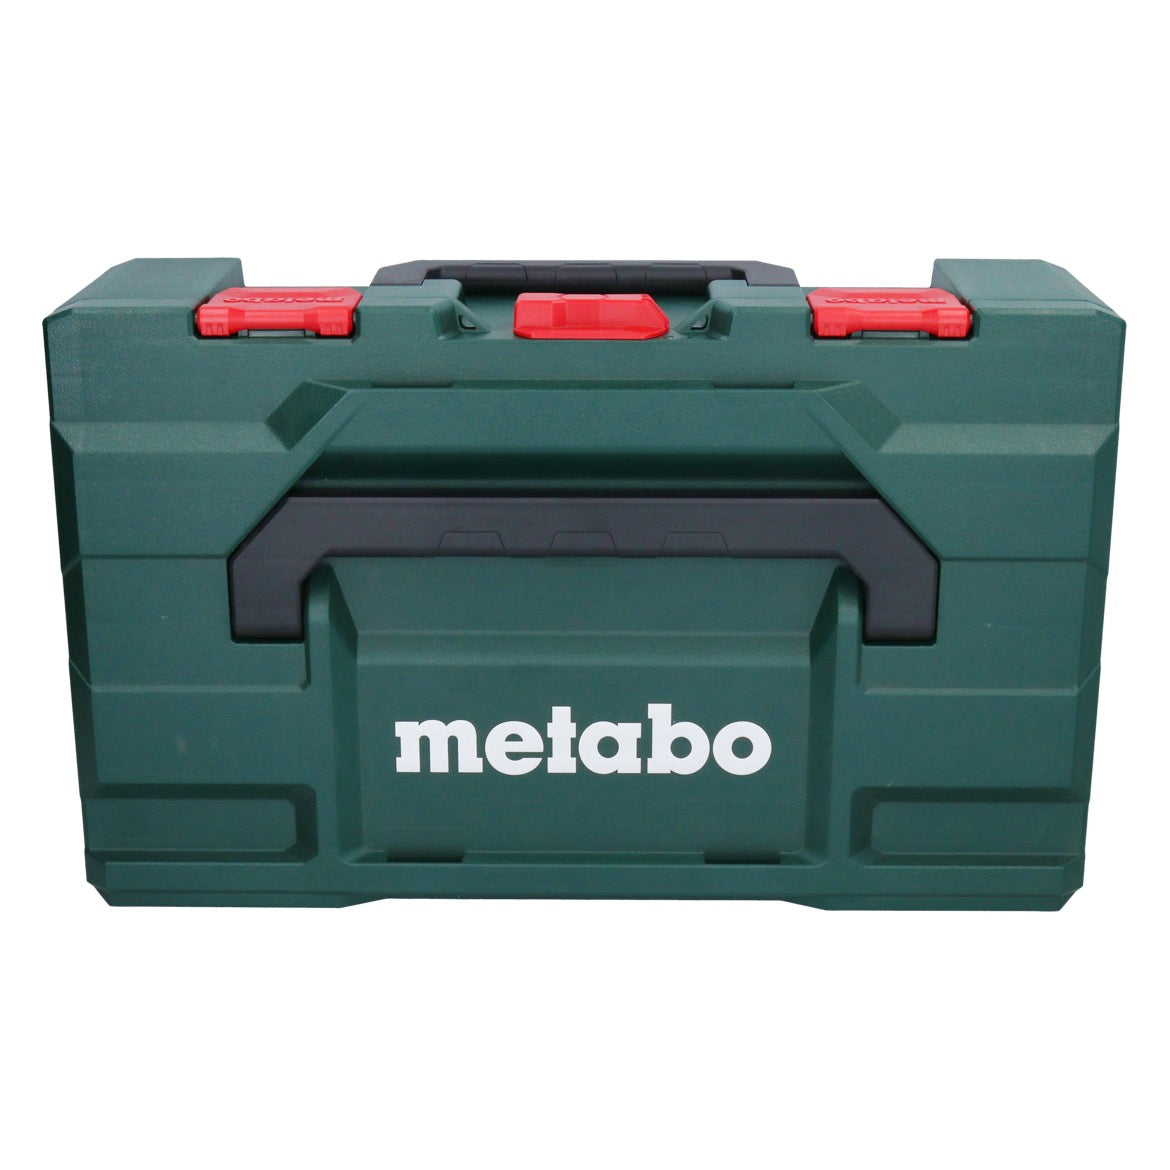 Metabo WVB 18 LTX BL 15-125 Quick Akku Winkelschleifer 18 V 125 mm Brushless + 1x Akku 4,0 Ah + Ladegerät + metaBOX